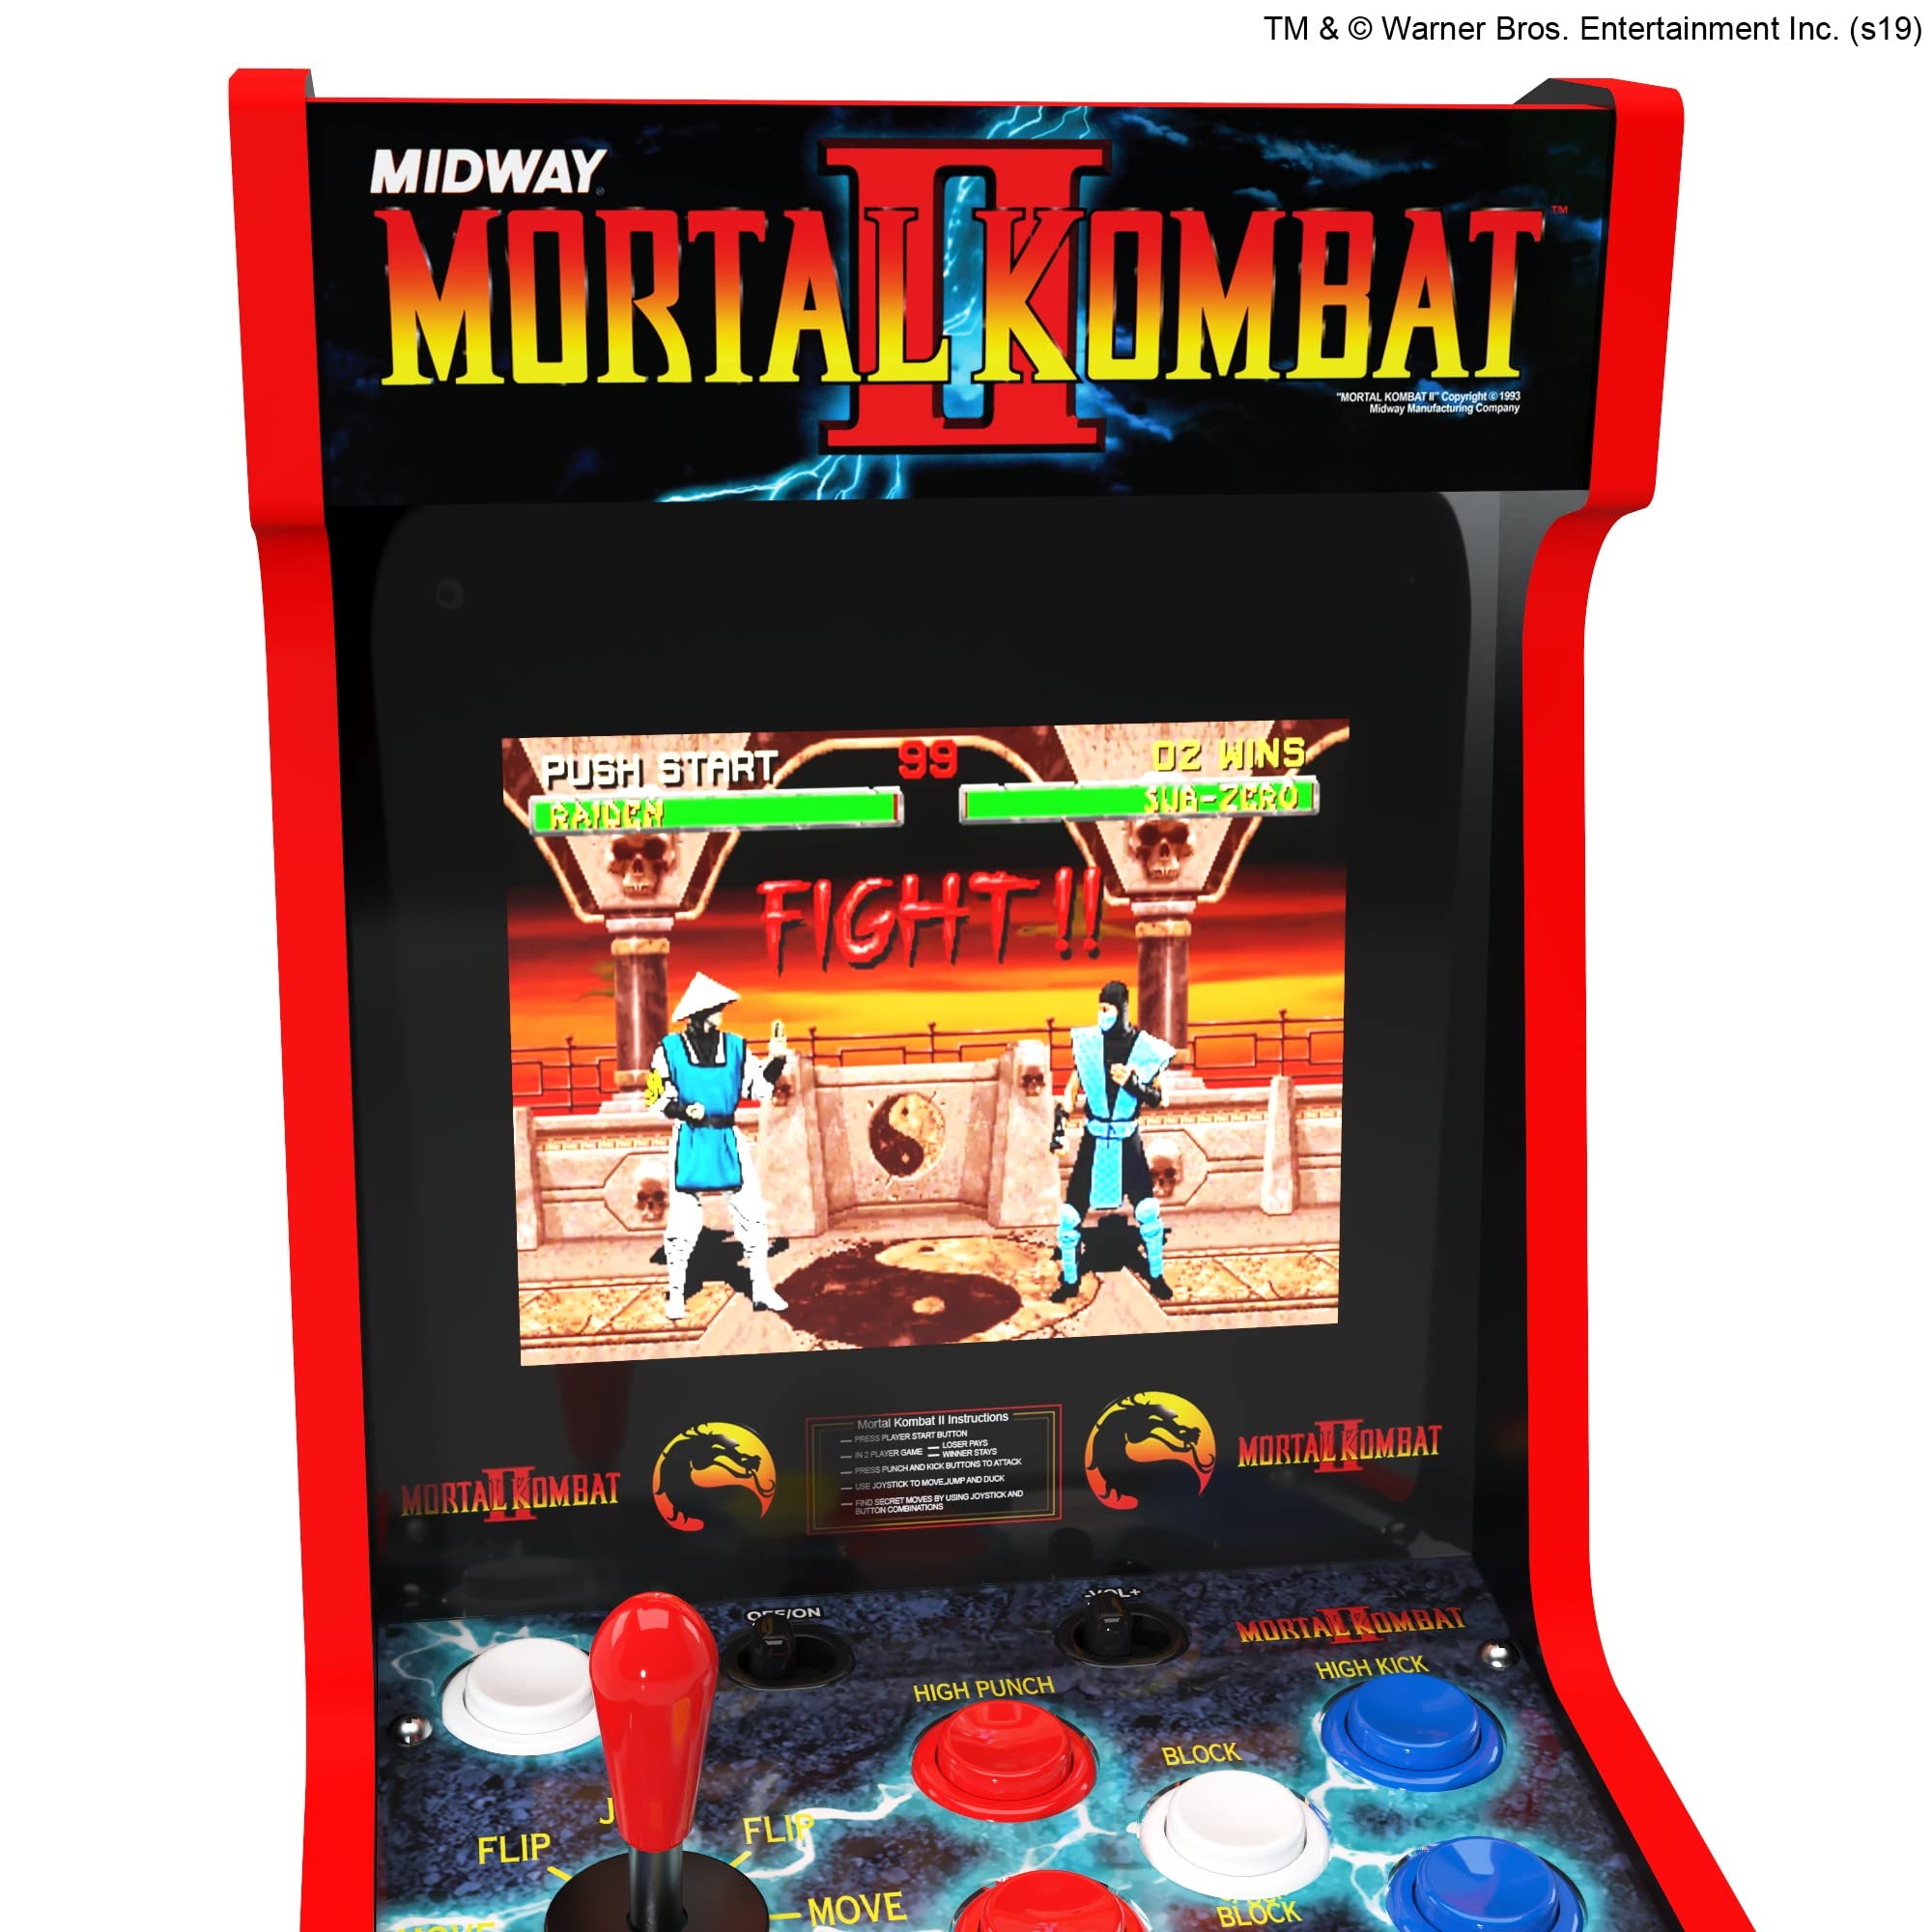 Arcade1UP Mortal Kombat Countercade 3 Games in 1